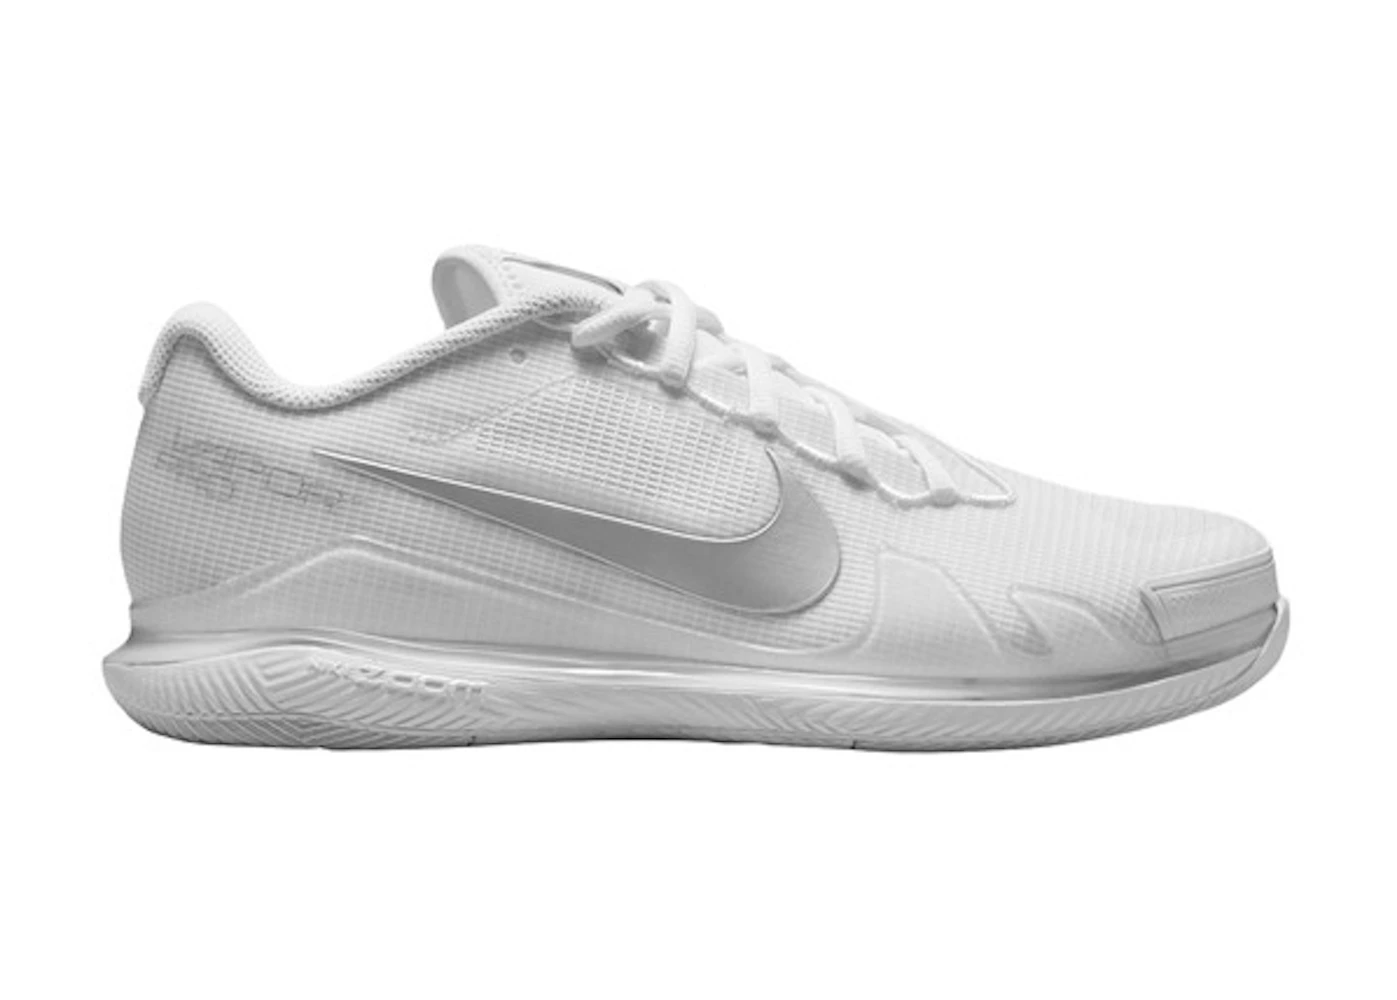 Nike Court Air Zoom Vapor Pro White Silver (Women's) - CZ0222-108 - US